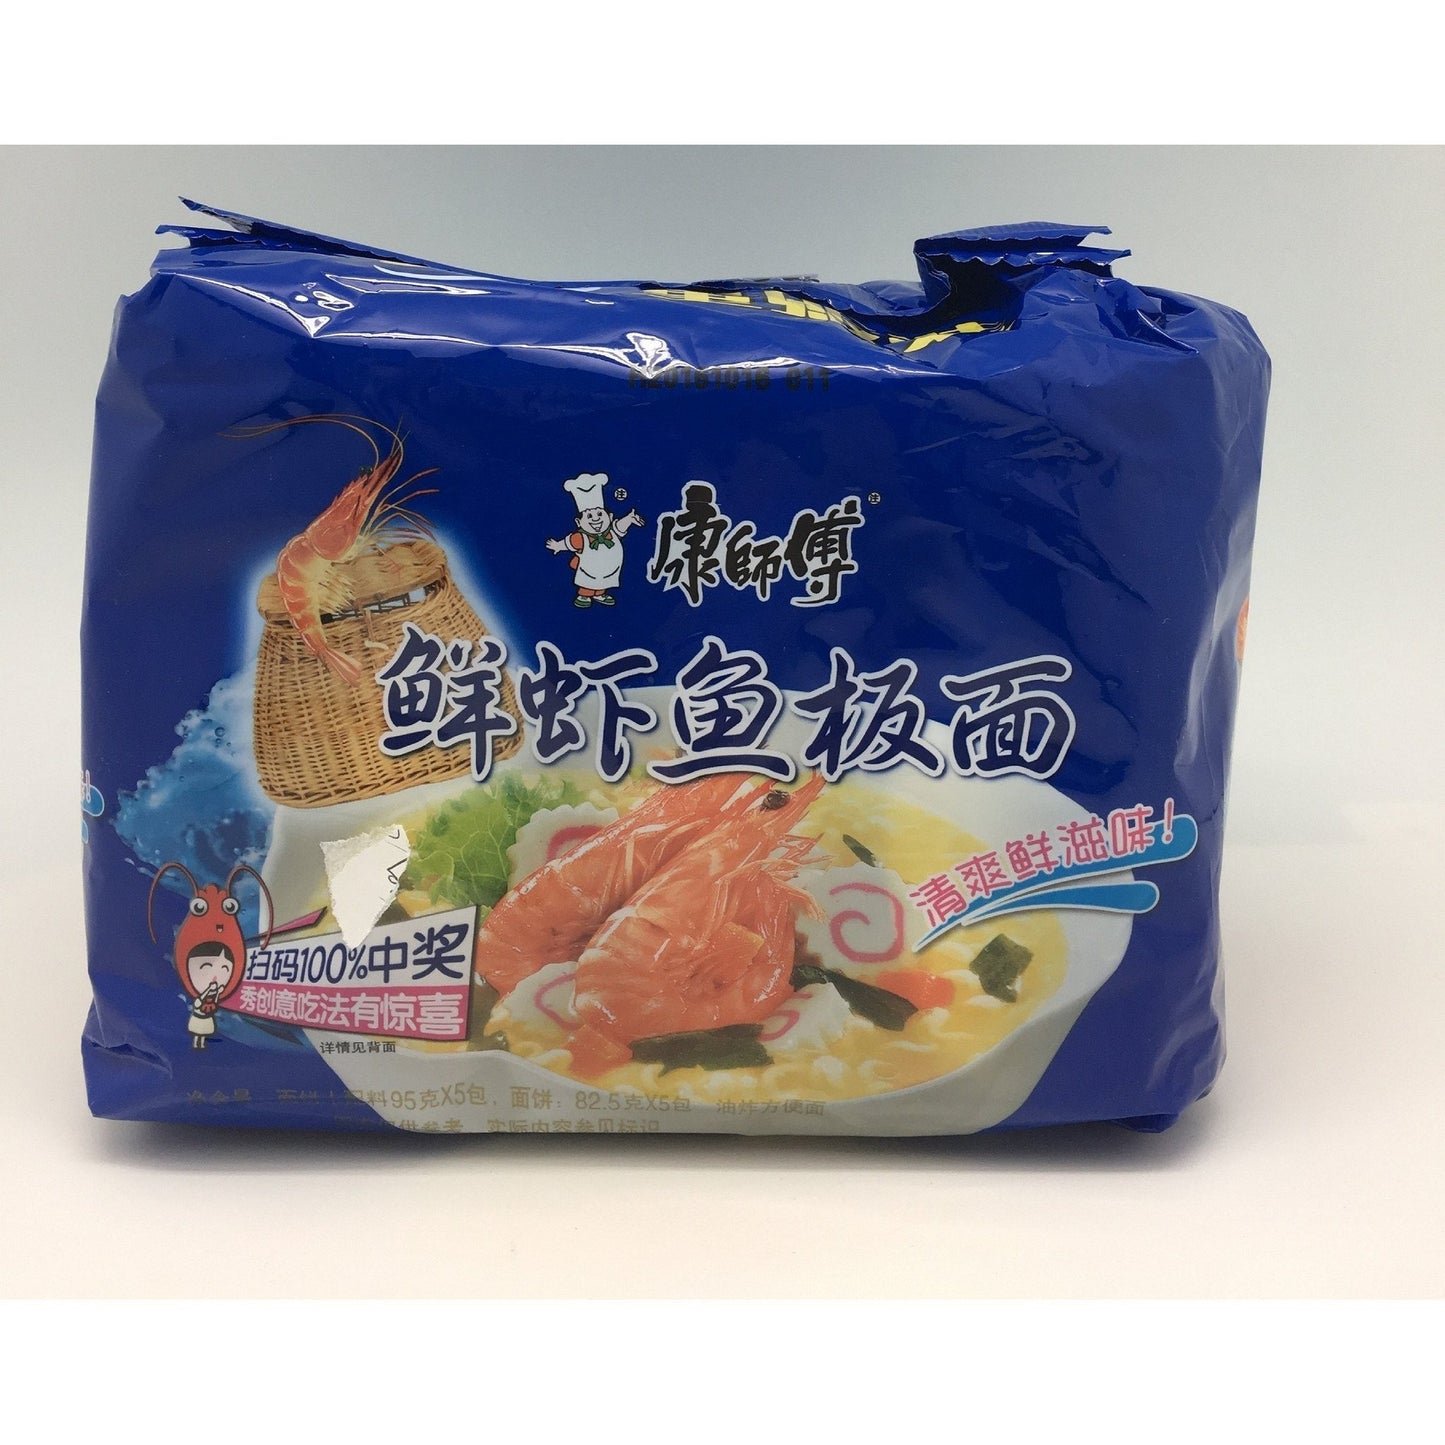 N002CP Kon Brand - Instant Ramen Noodle X 5pk - 30pkt  /1CTN - New Eastland Pty Ltd - Asian food wholesalers